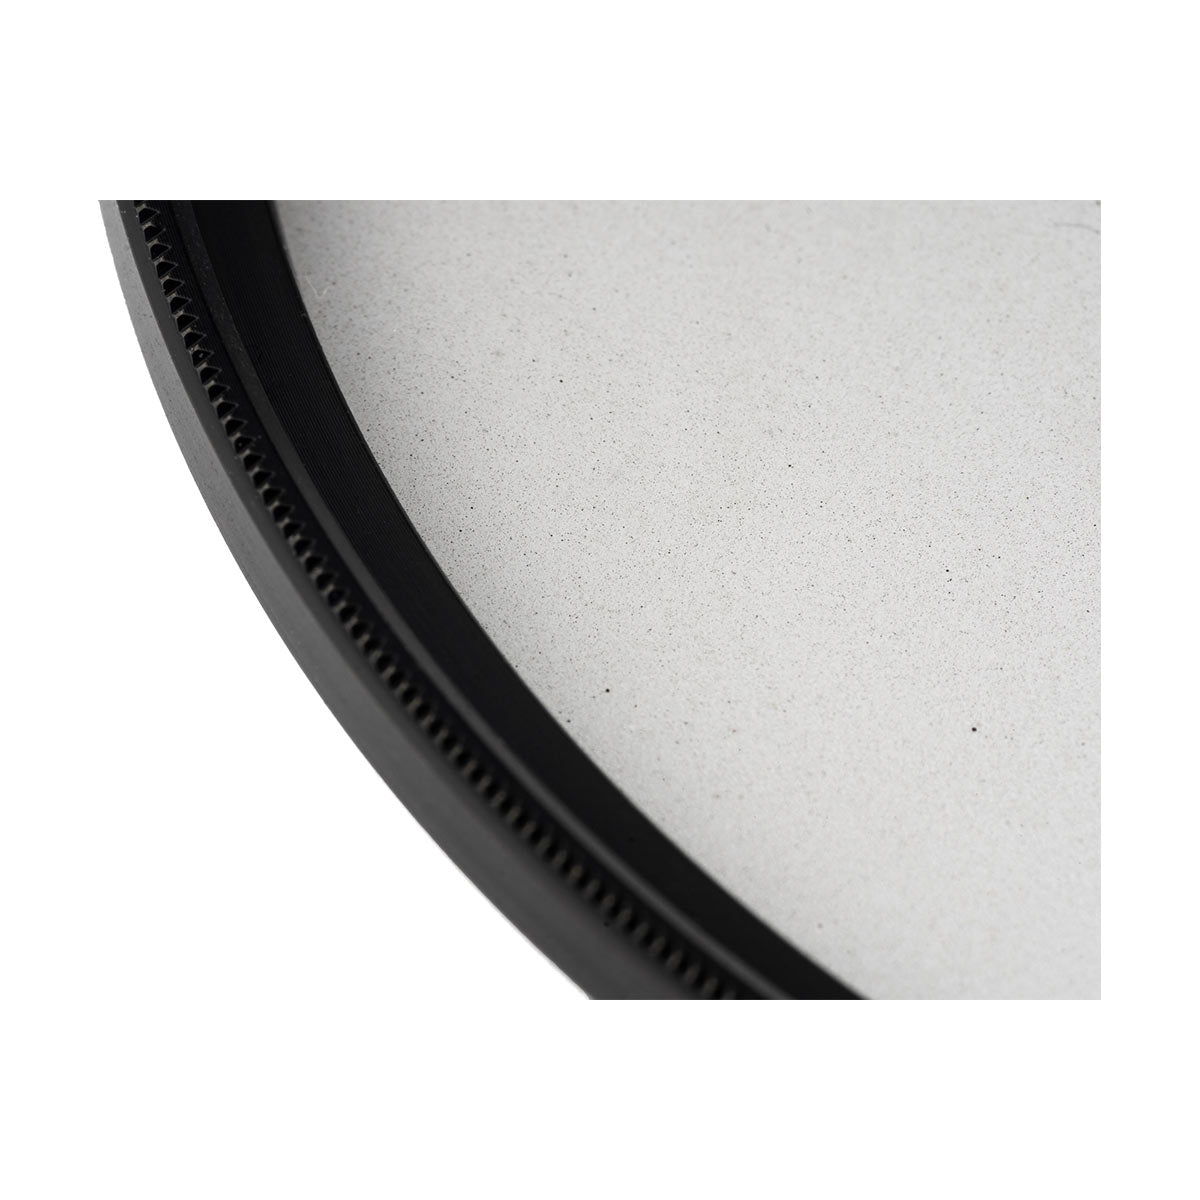 NiSi 82mm Circular Black Mist 1/4 Filter